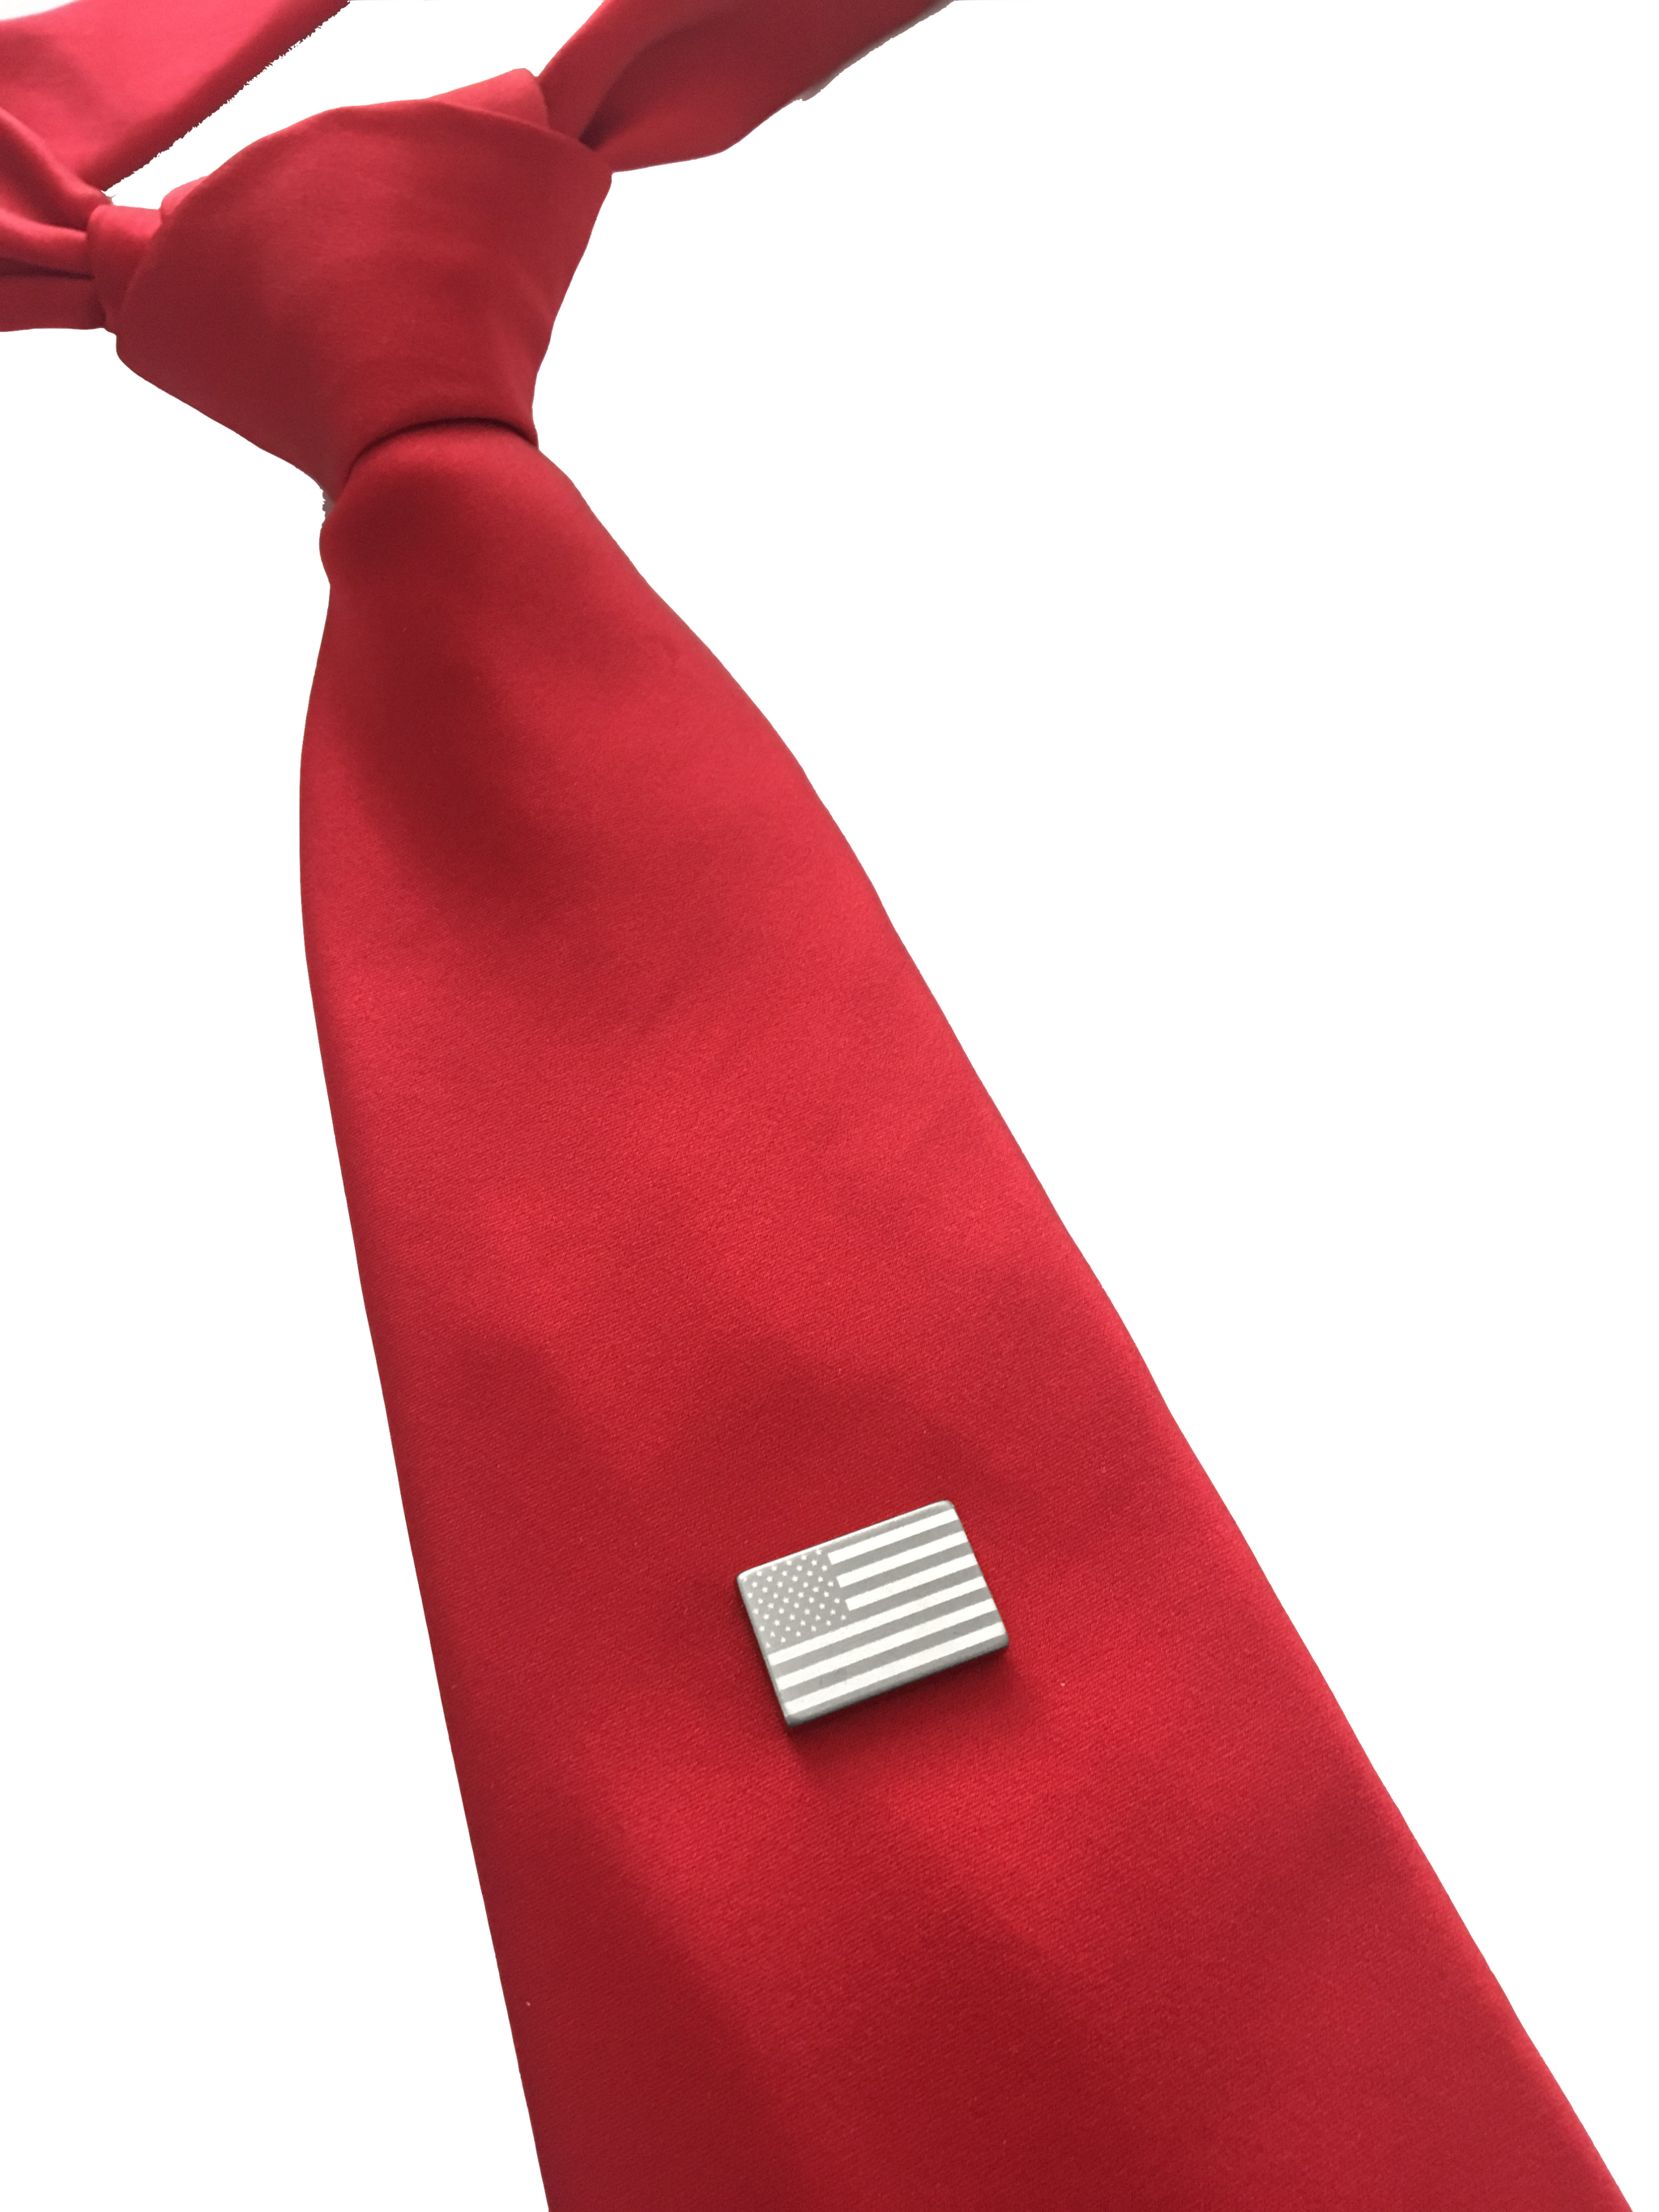 Red Tie Clip Art - Red Tie Image